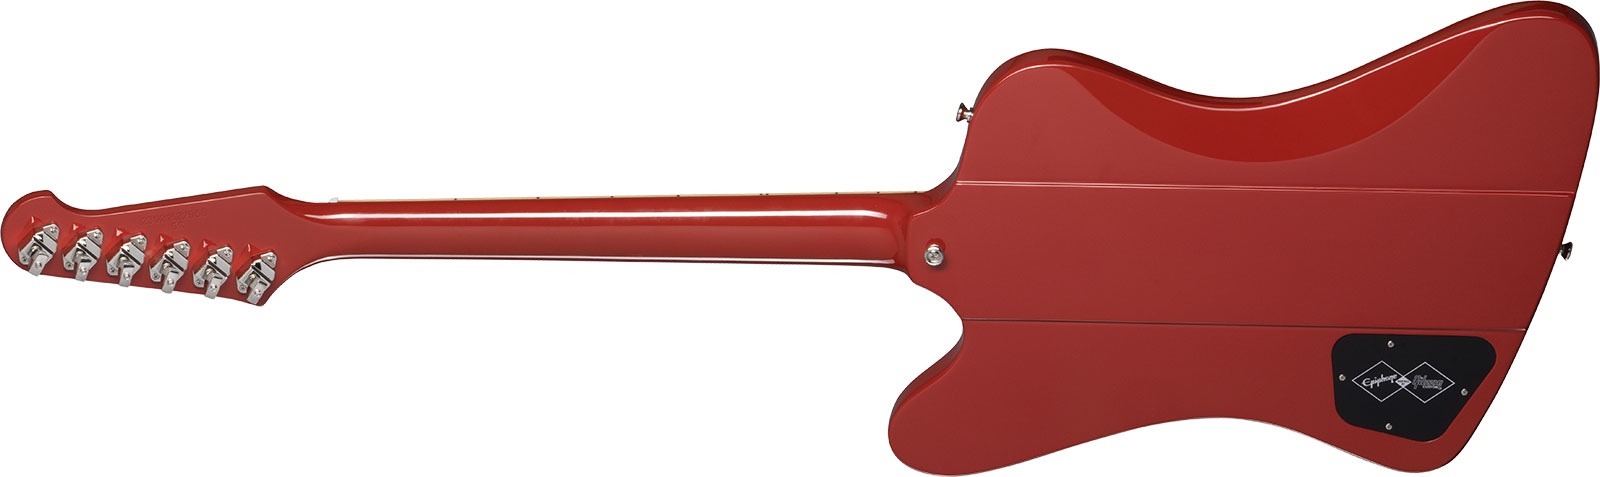 Epiphone Firebird V 1963 Maestro Vibrola Inspired By Gibson Custom 2mh Trem Lau - Ember Red - Retro-Rock-E-Gitarre - Variation 1